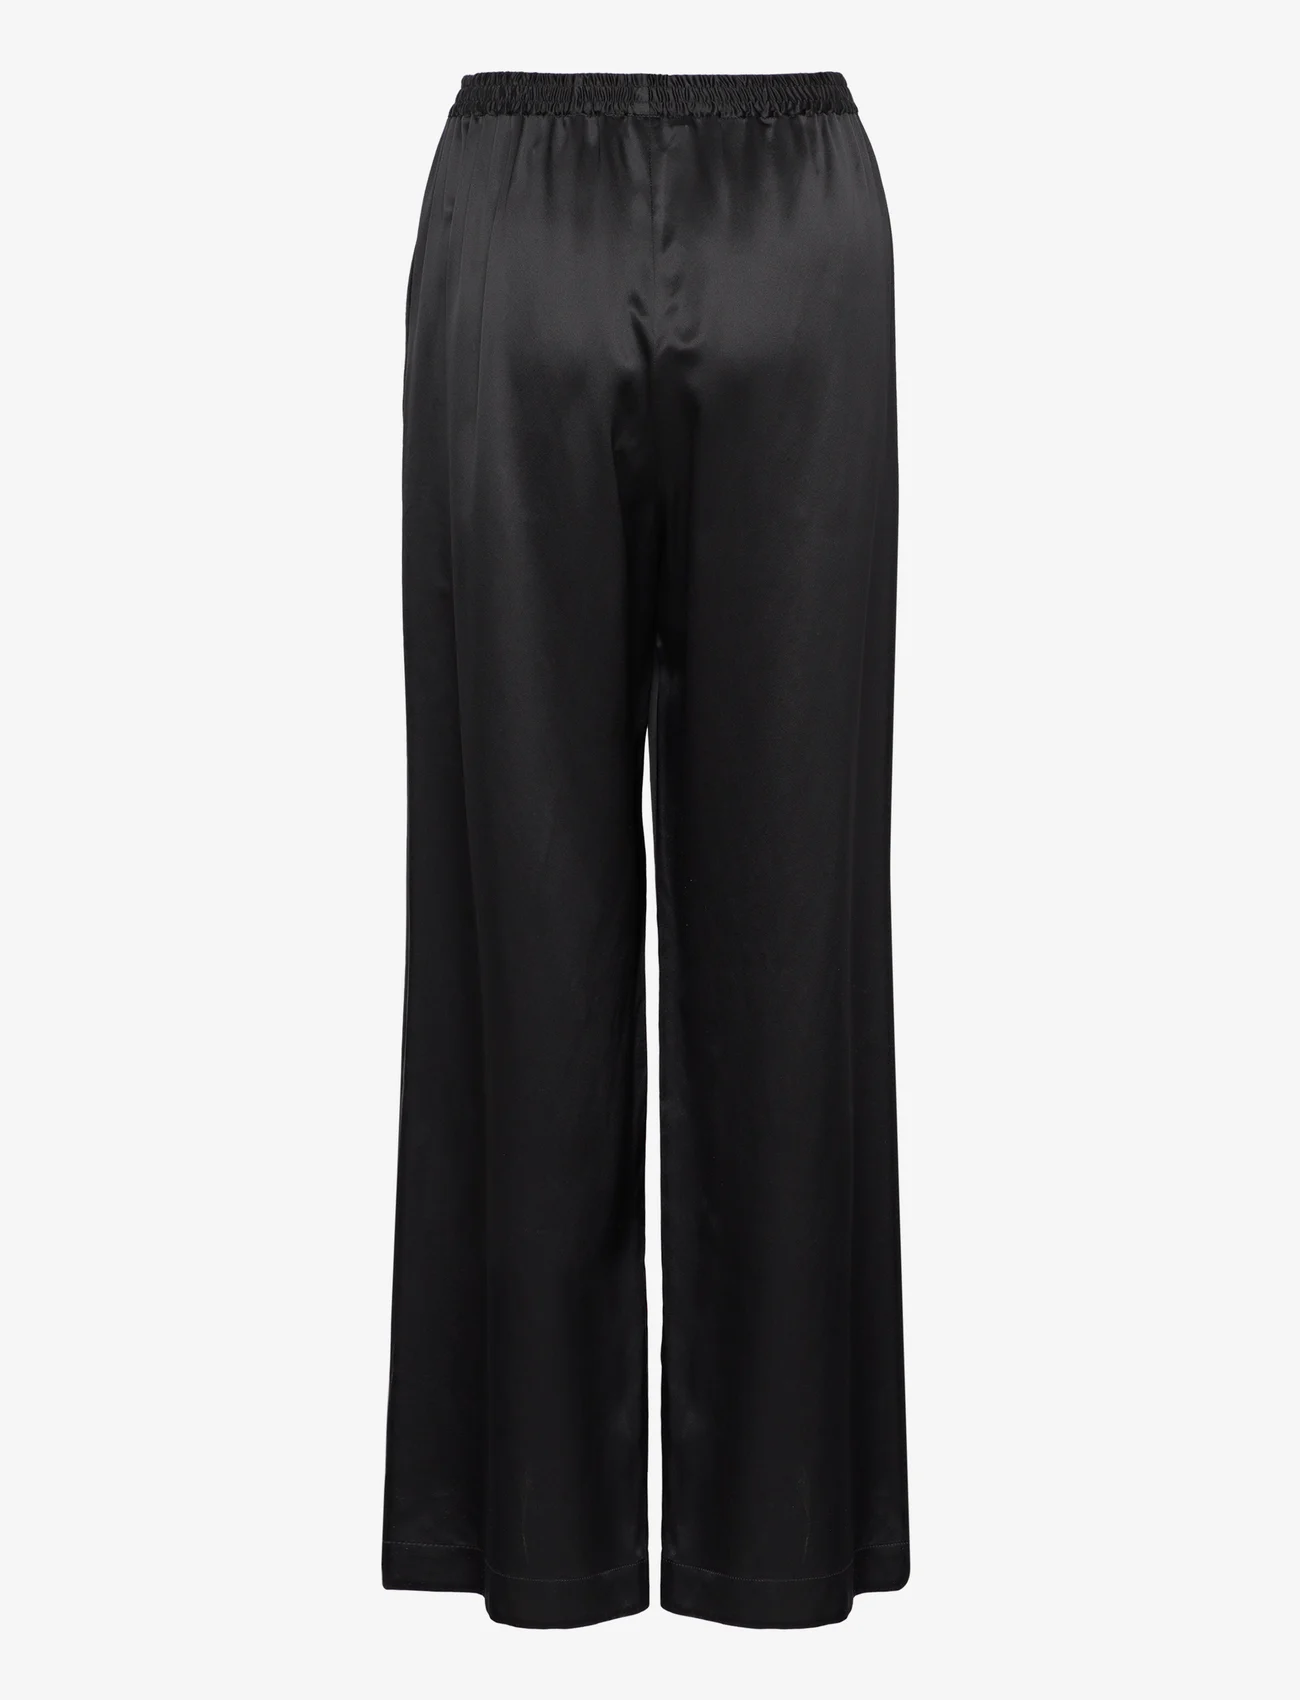 Wood Wood - Florence trousers - leveälahkeiset housut - black - 1